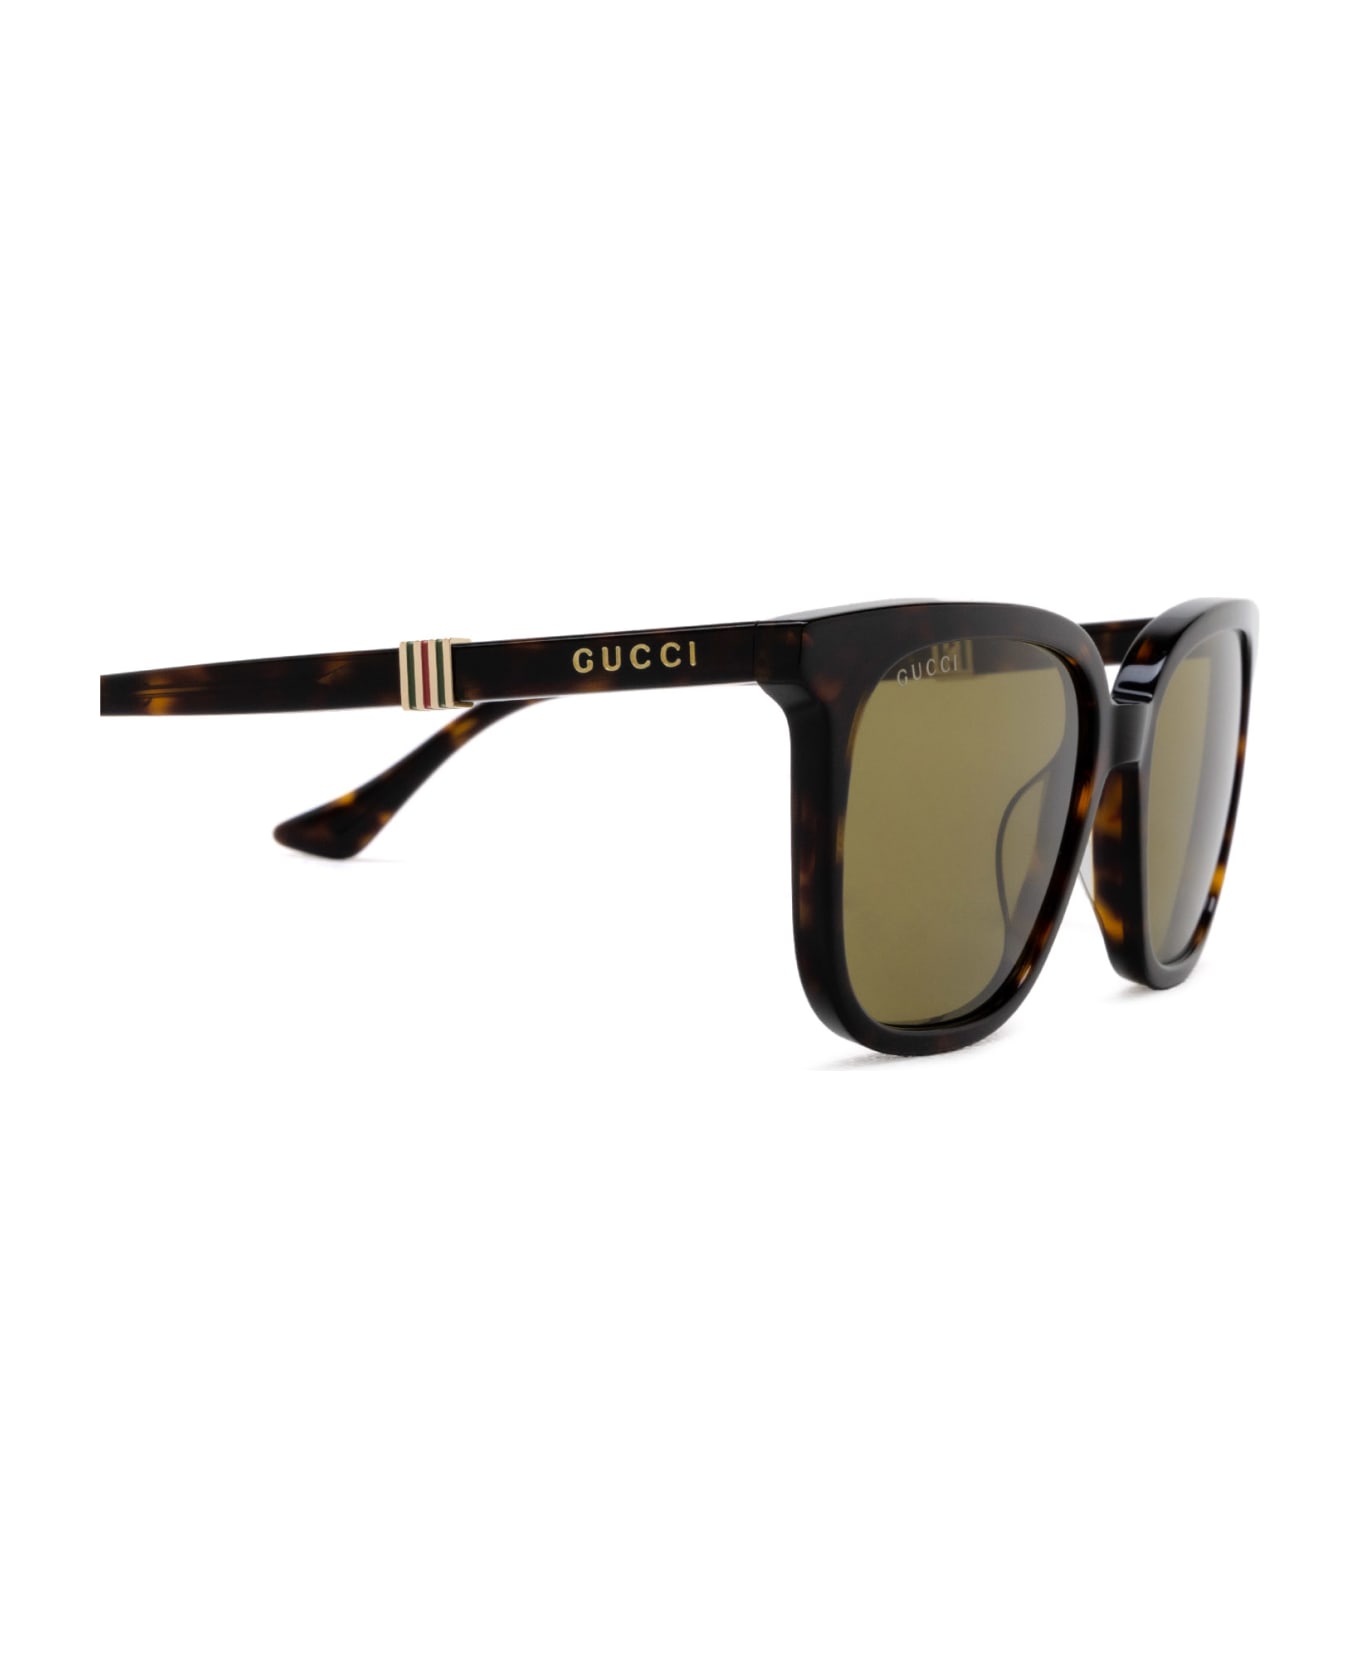 Gucci Eyewear Gg1493s Havana Sunglasses - Havana